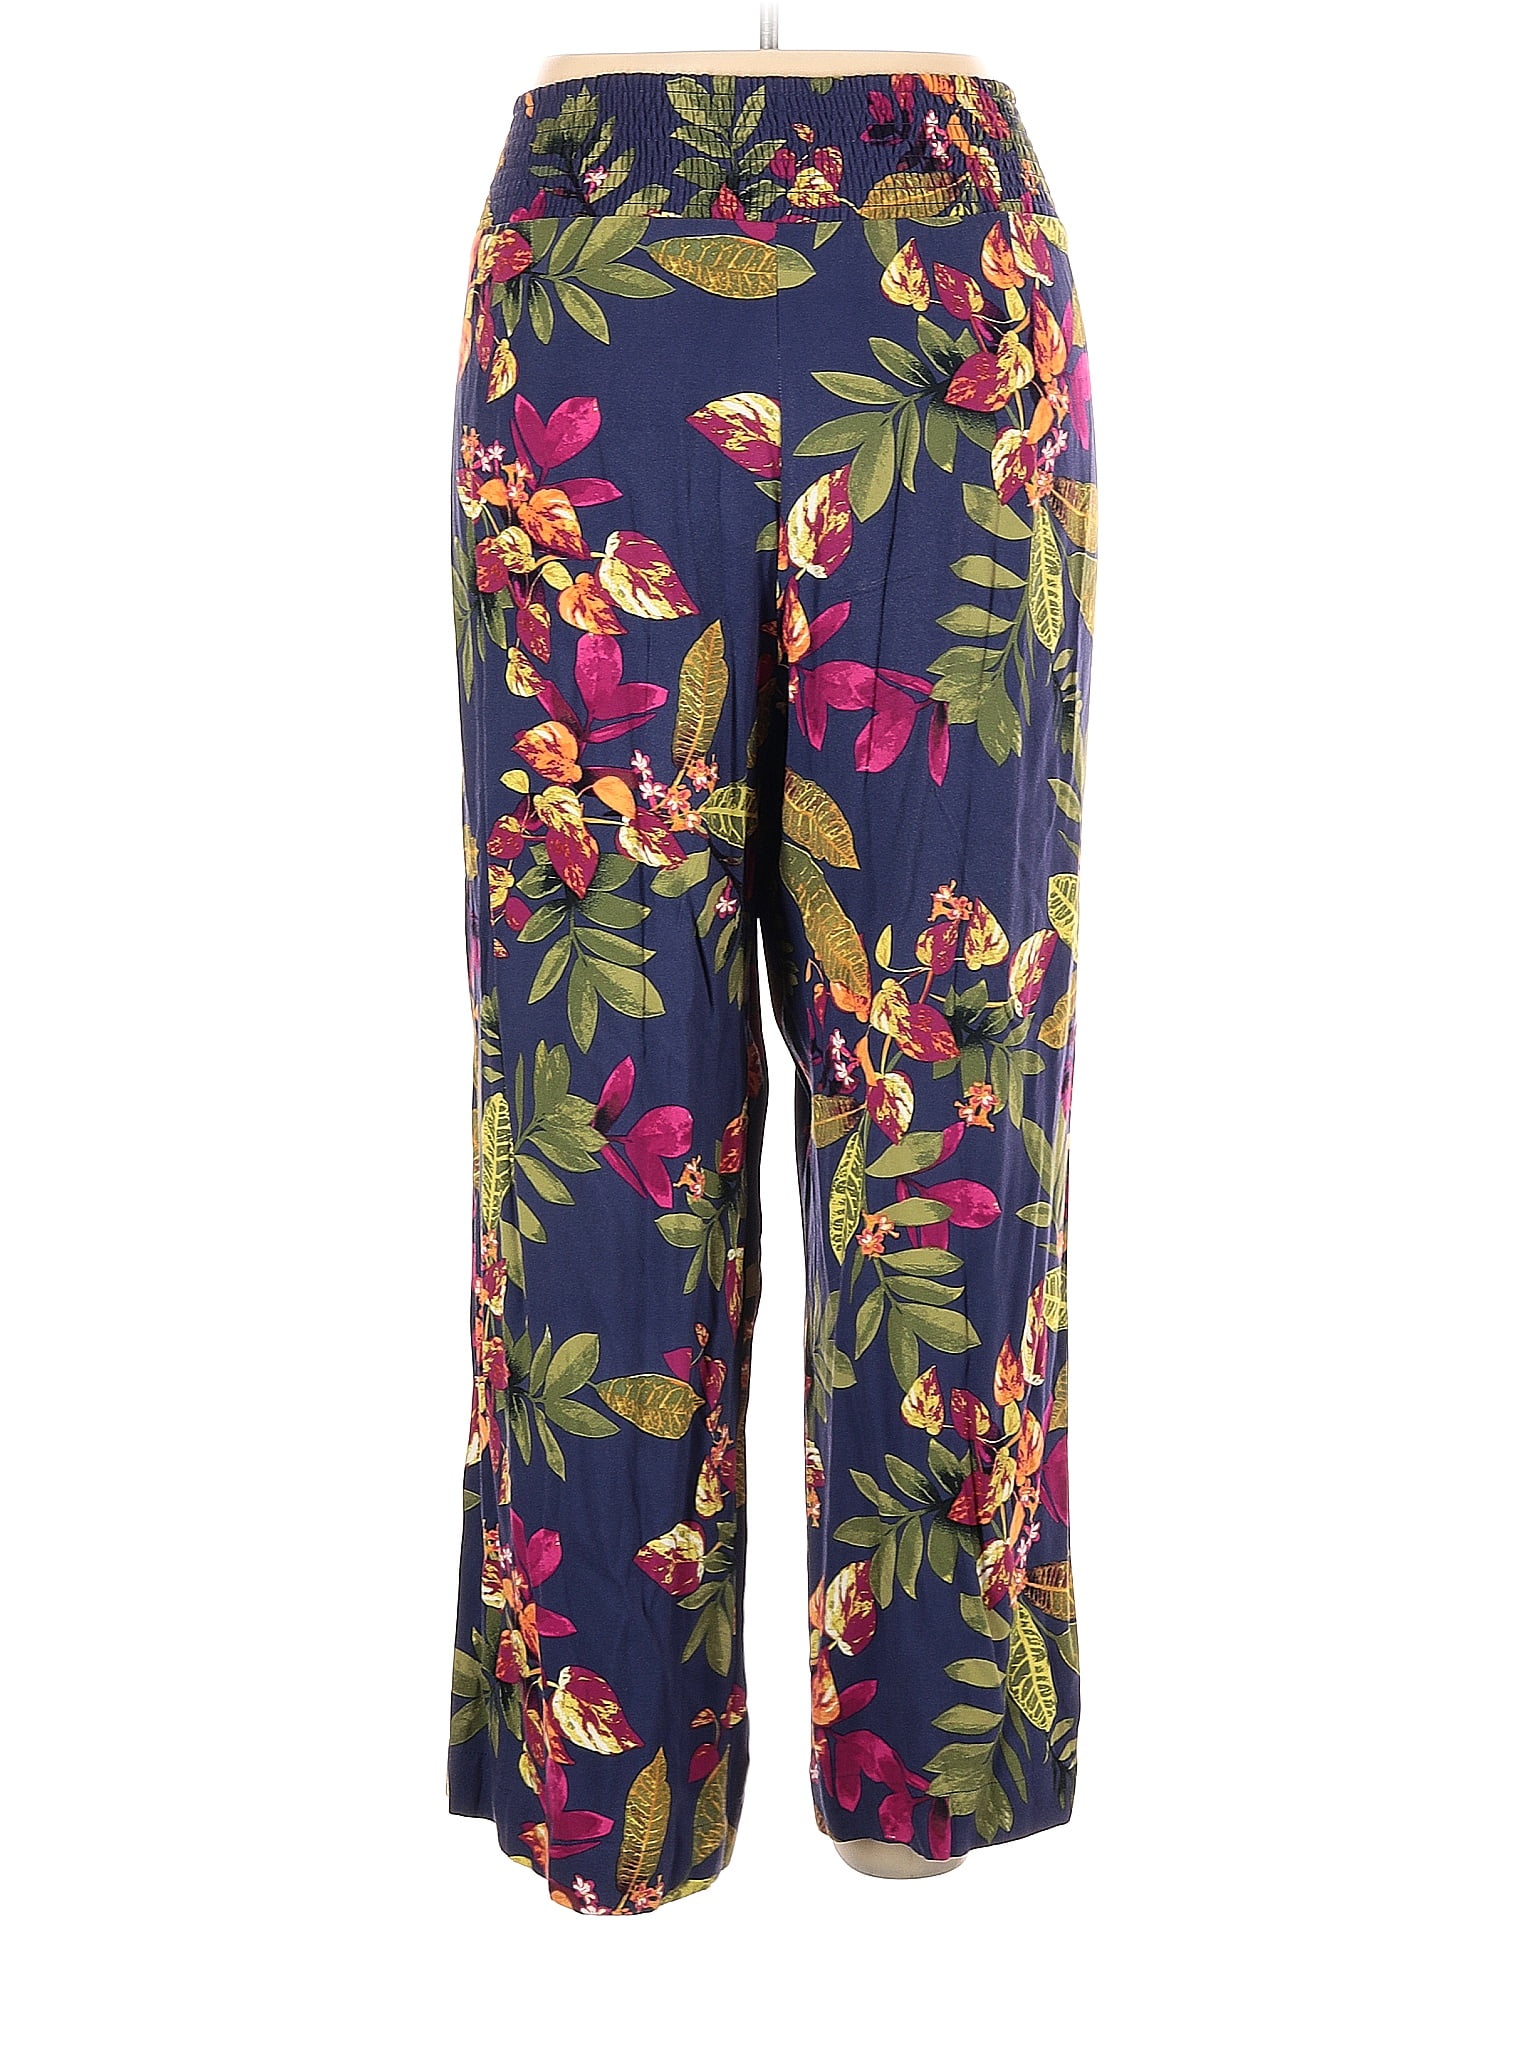 J.Jill 100% Rayon Floral Blue Casual Pants Size XL - 67% off